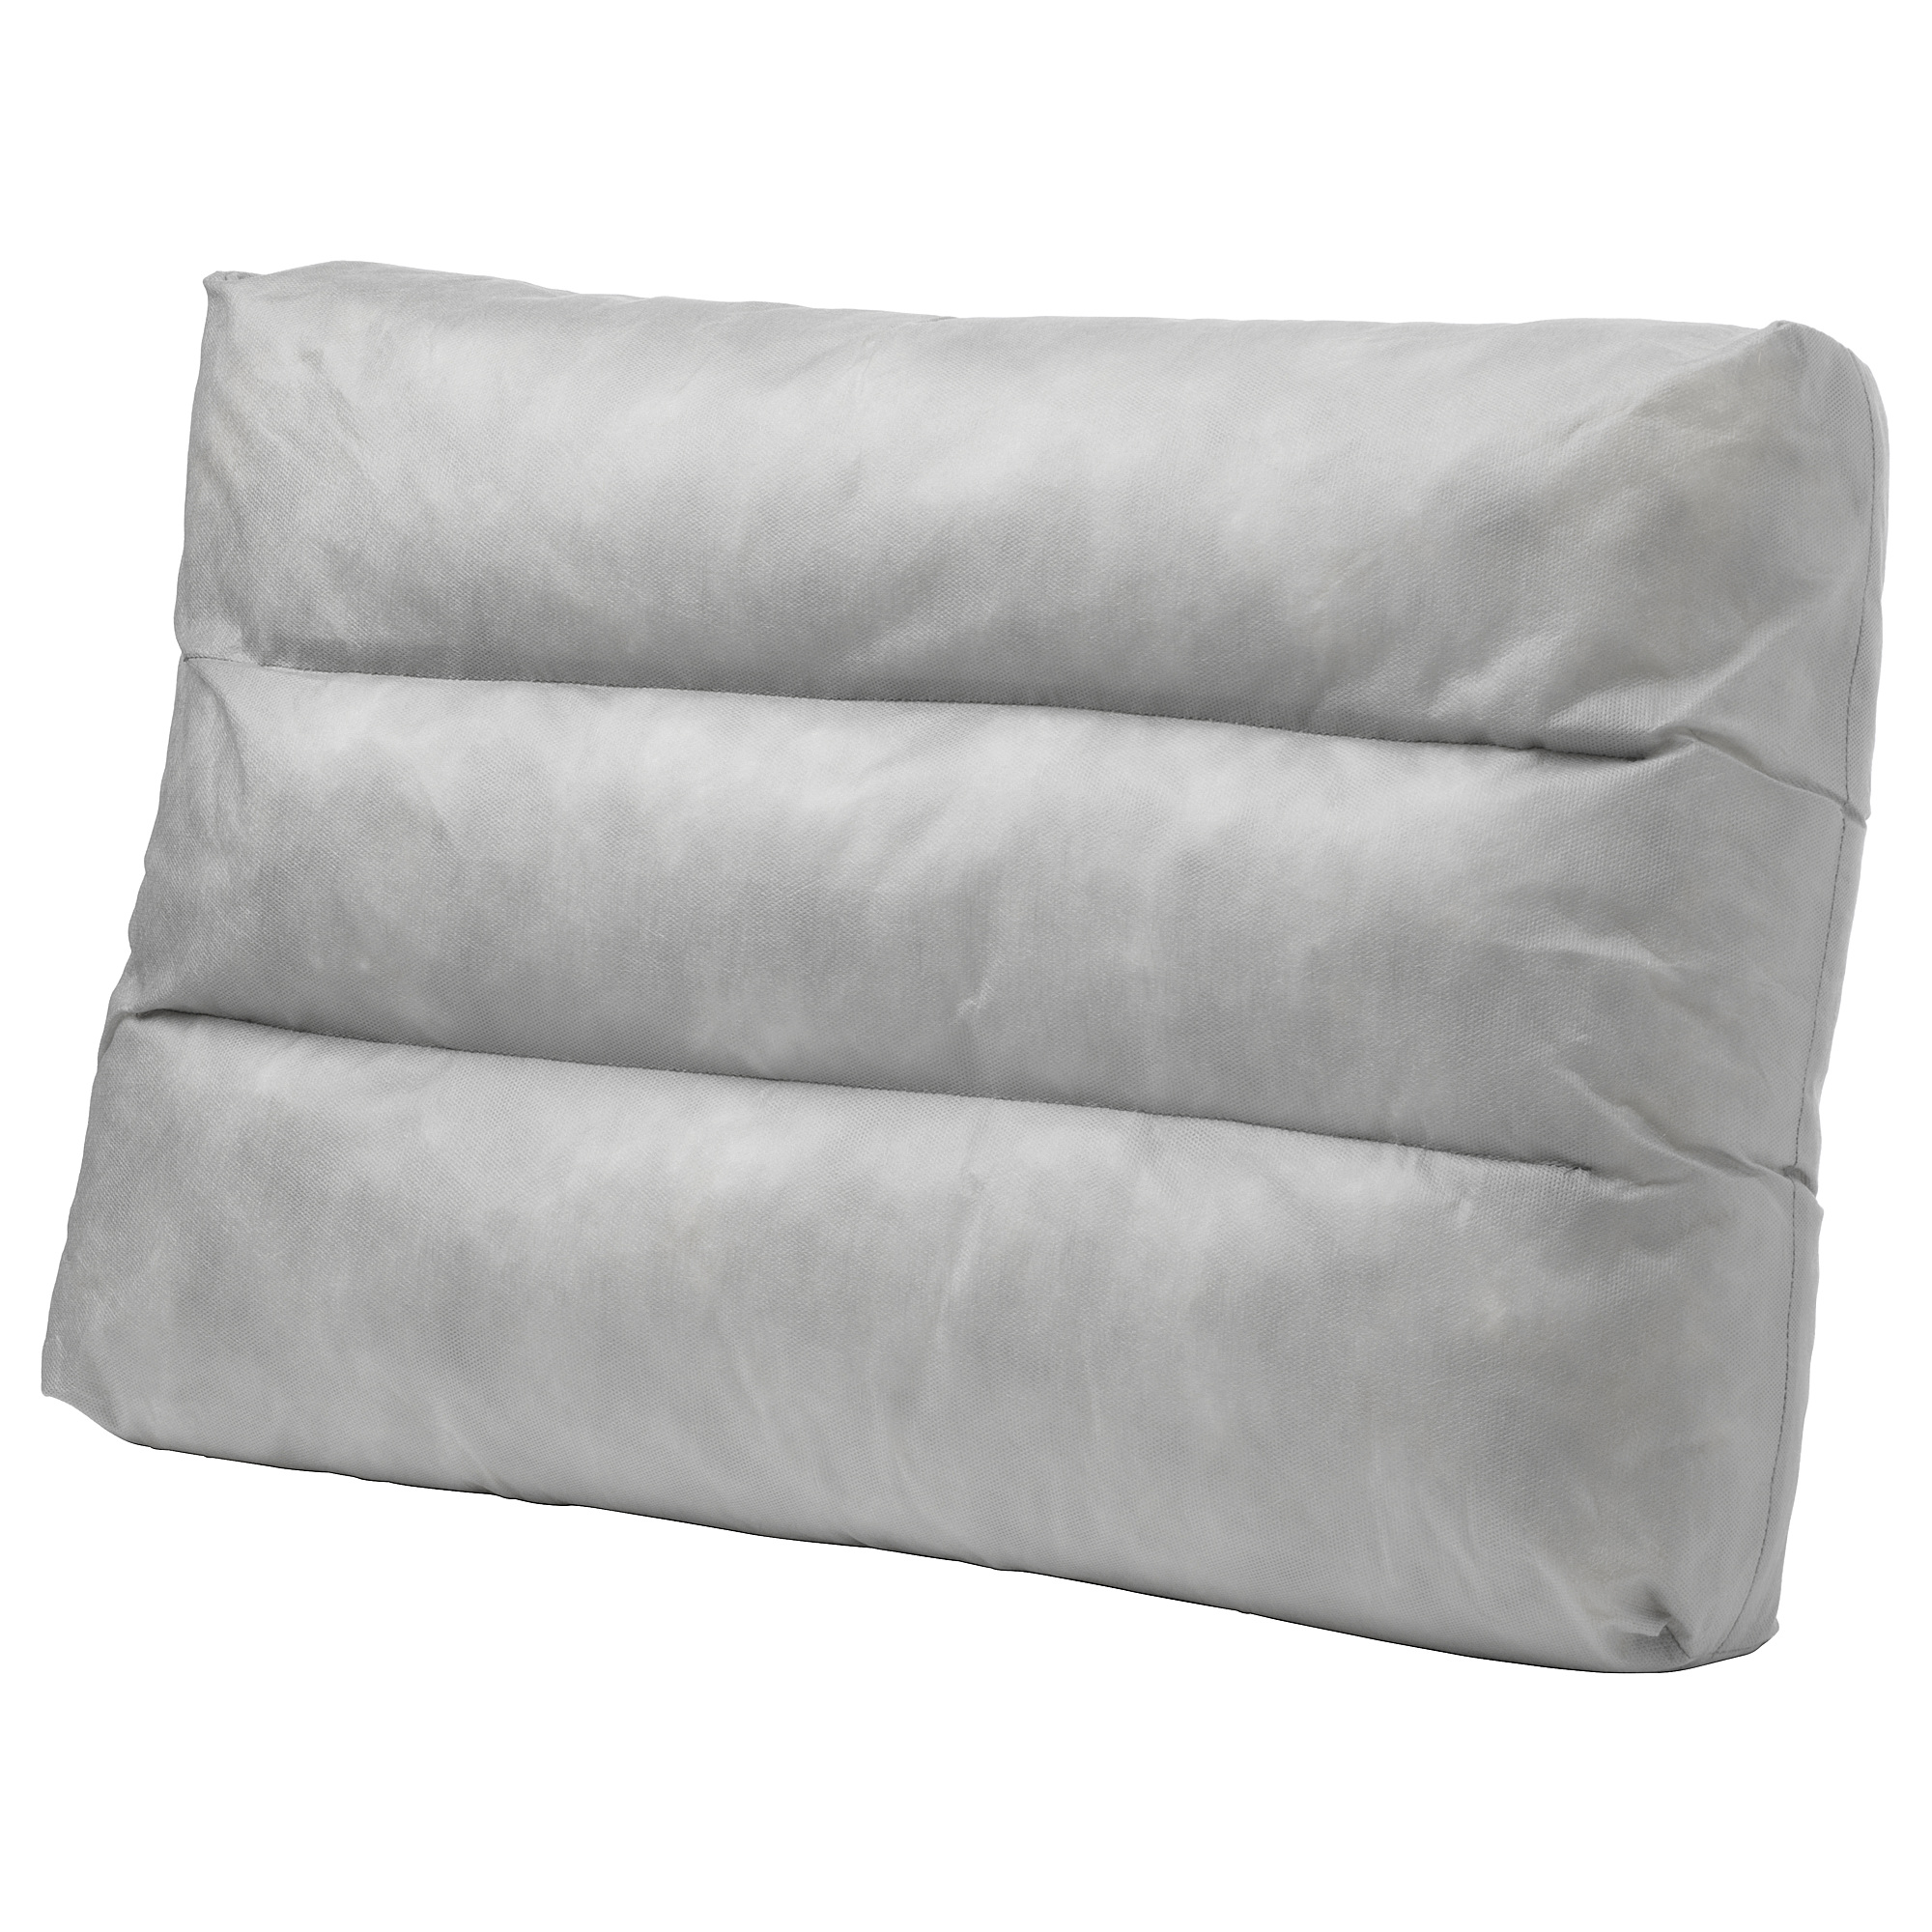 KUDDARNA Back cushion, outdoor, beige, 243/8x173/8 - IKEA